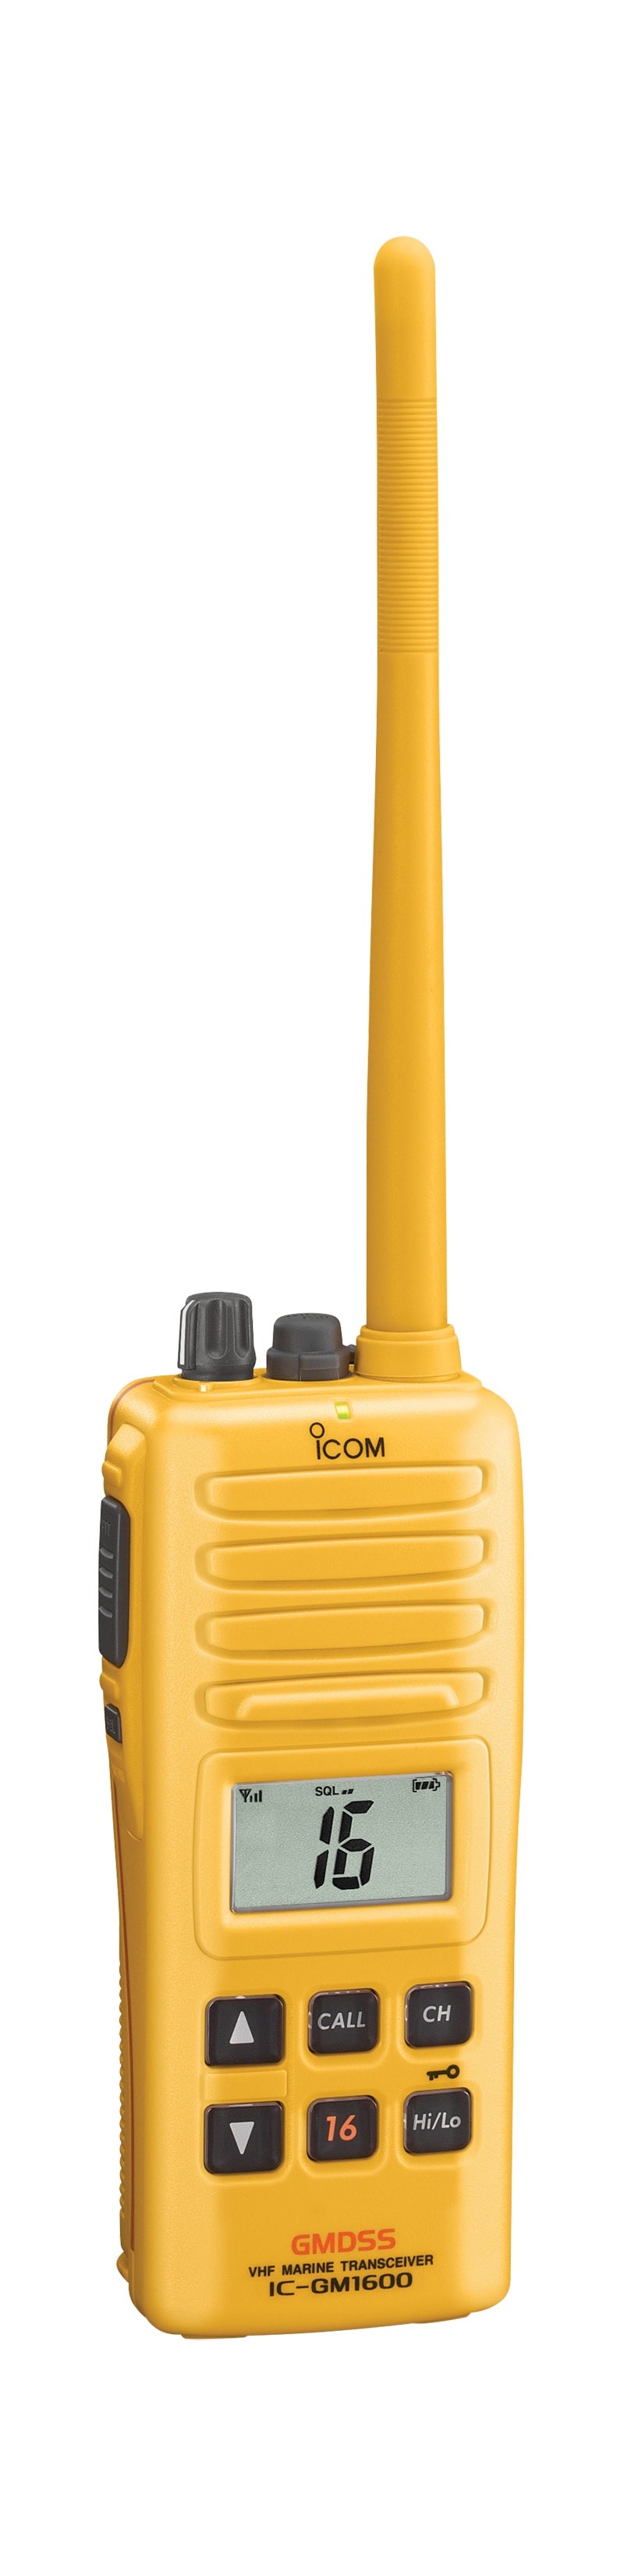 Icom GM1600 GMDSS Radio Daily Use Kit with BP234/BP252 and BC173